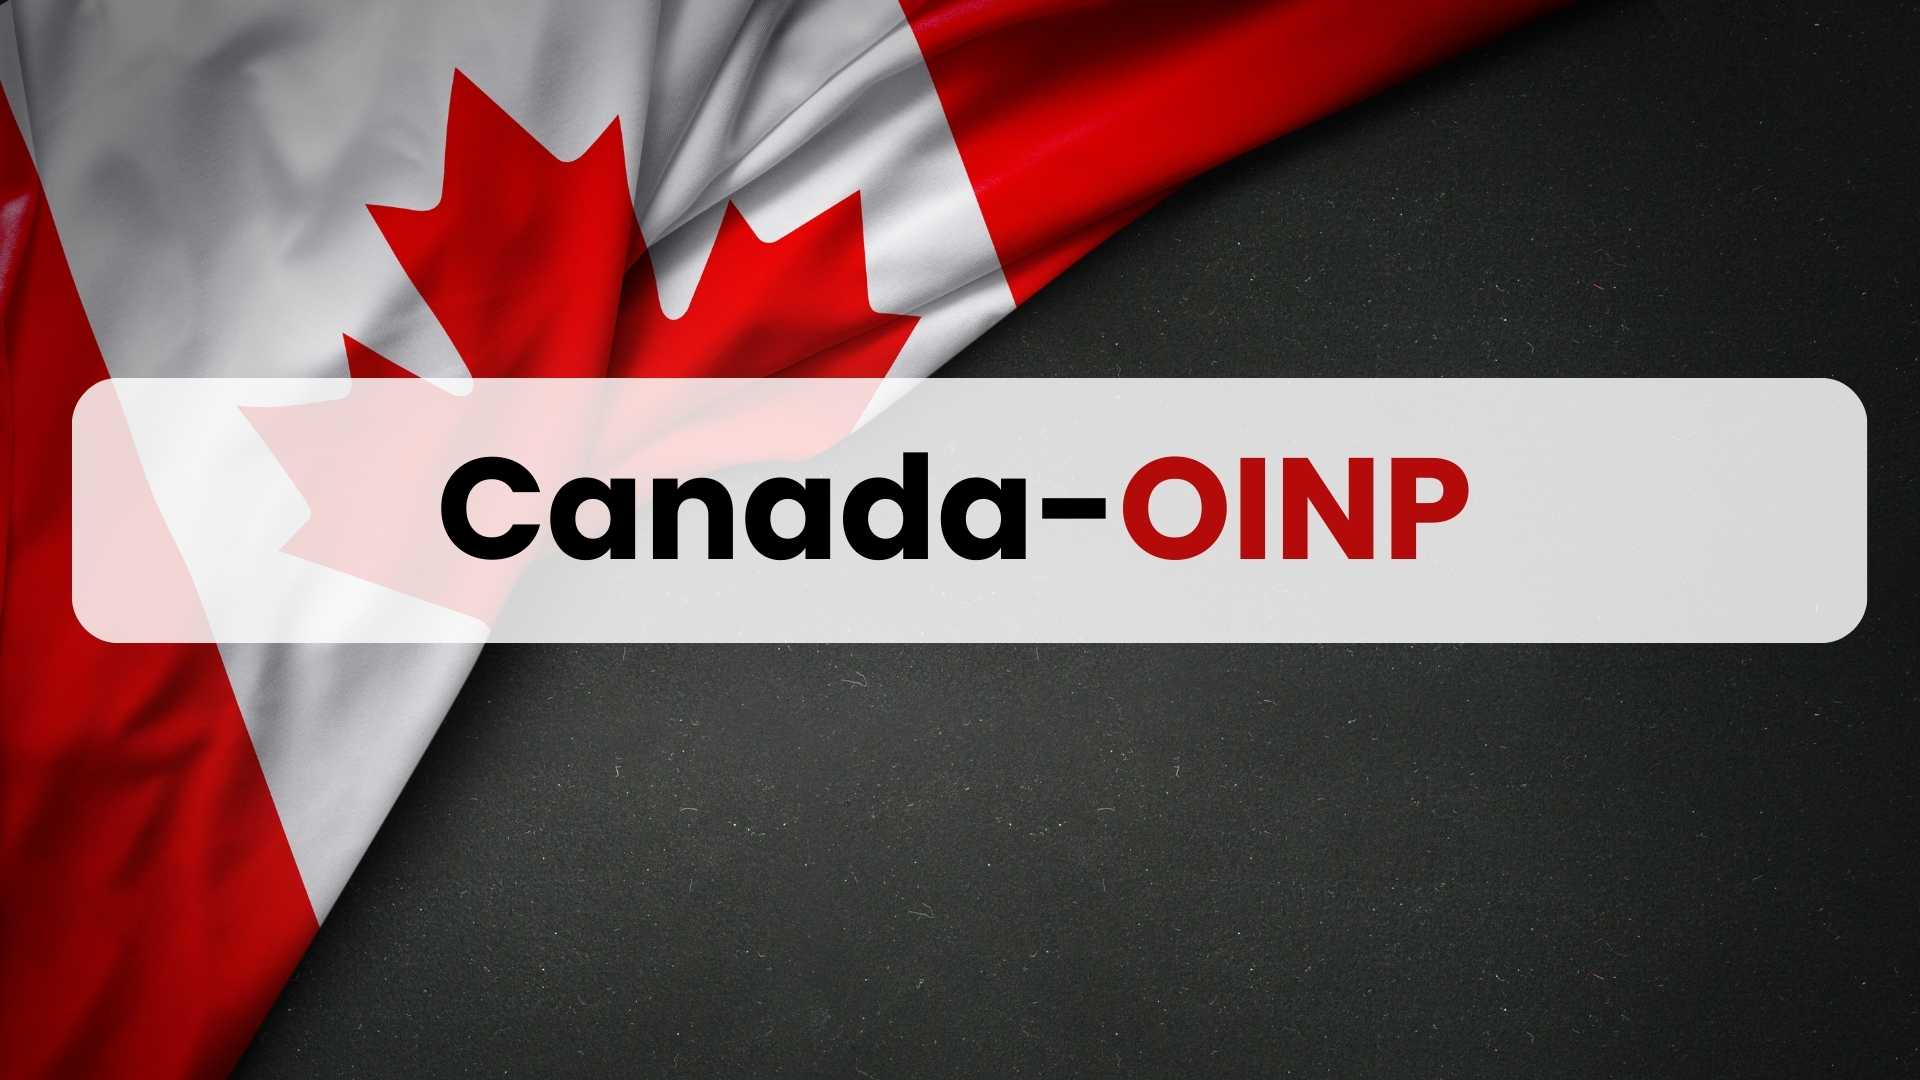 CANADA-OINP (Ontario Immigrant Nominee Program)